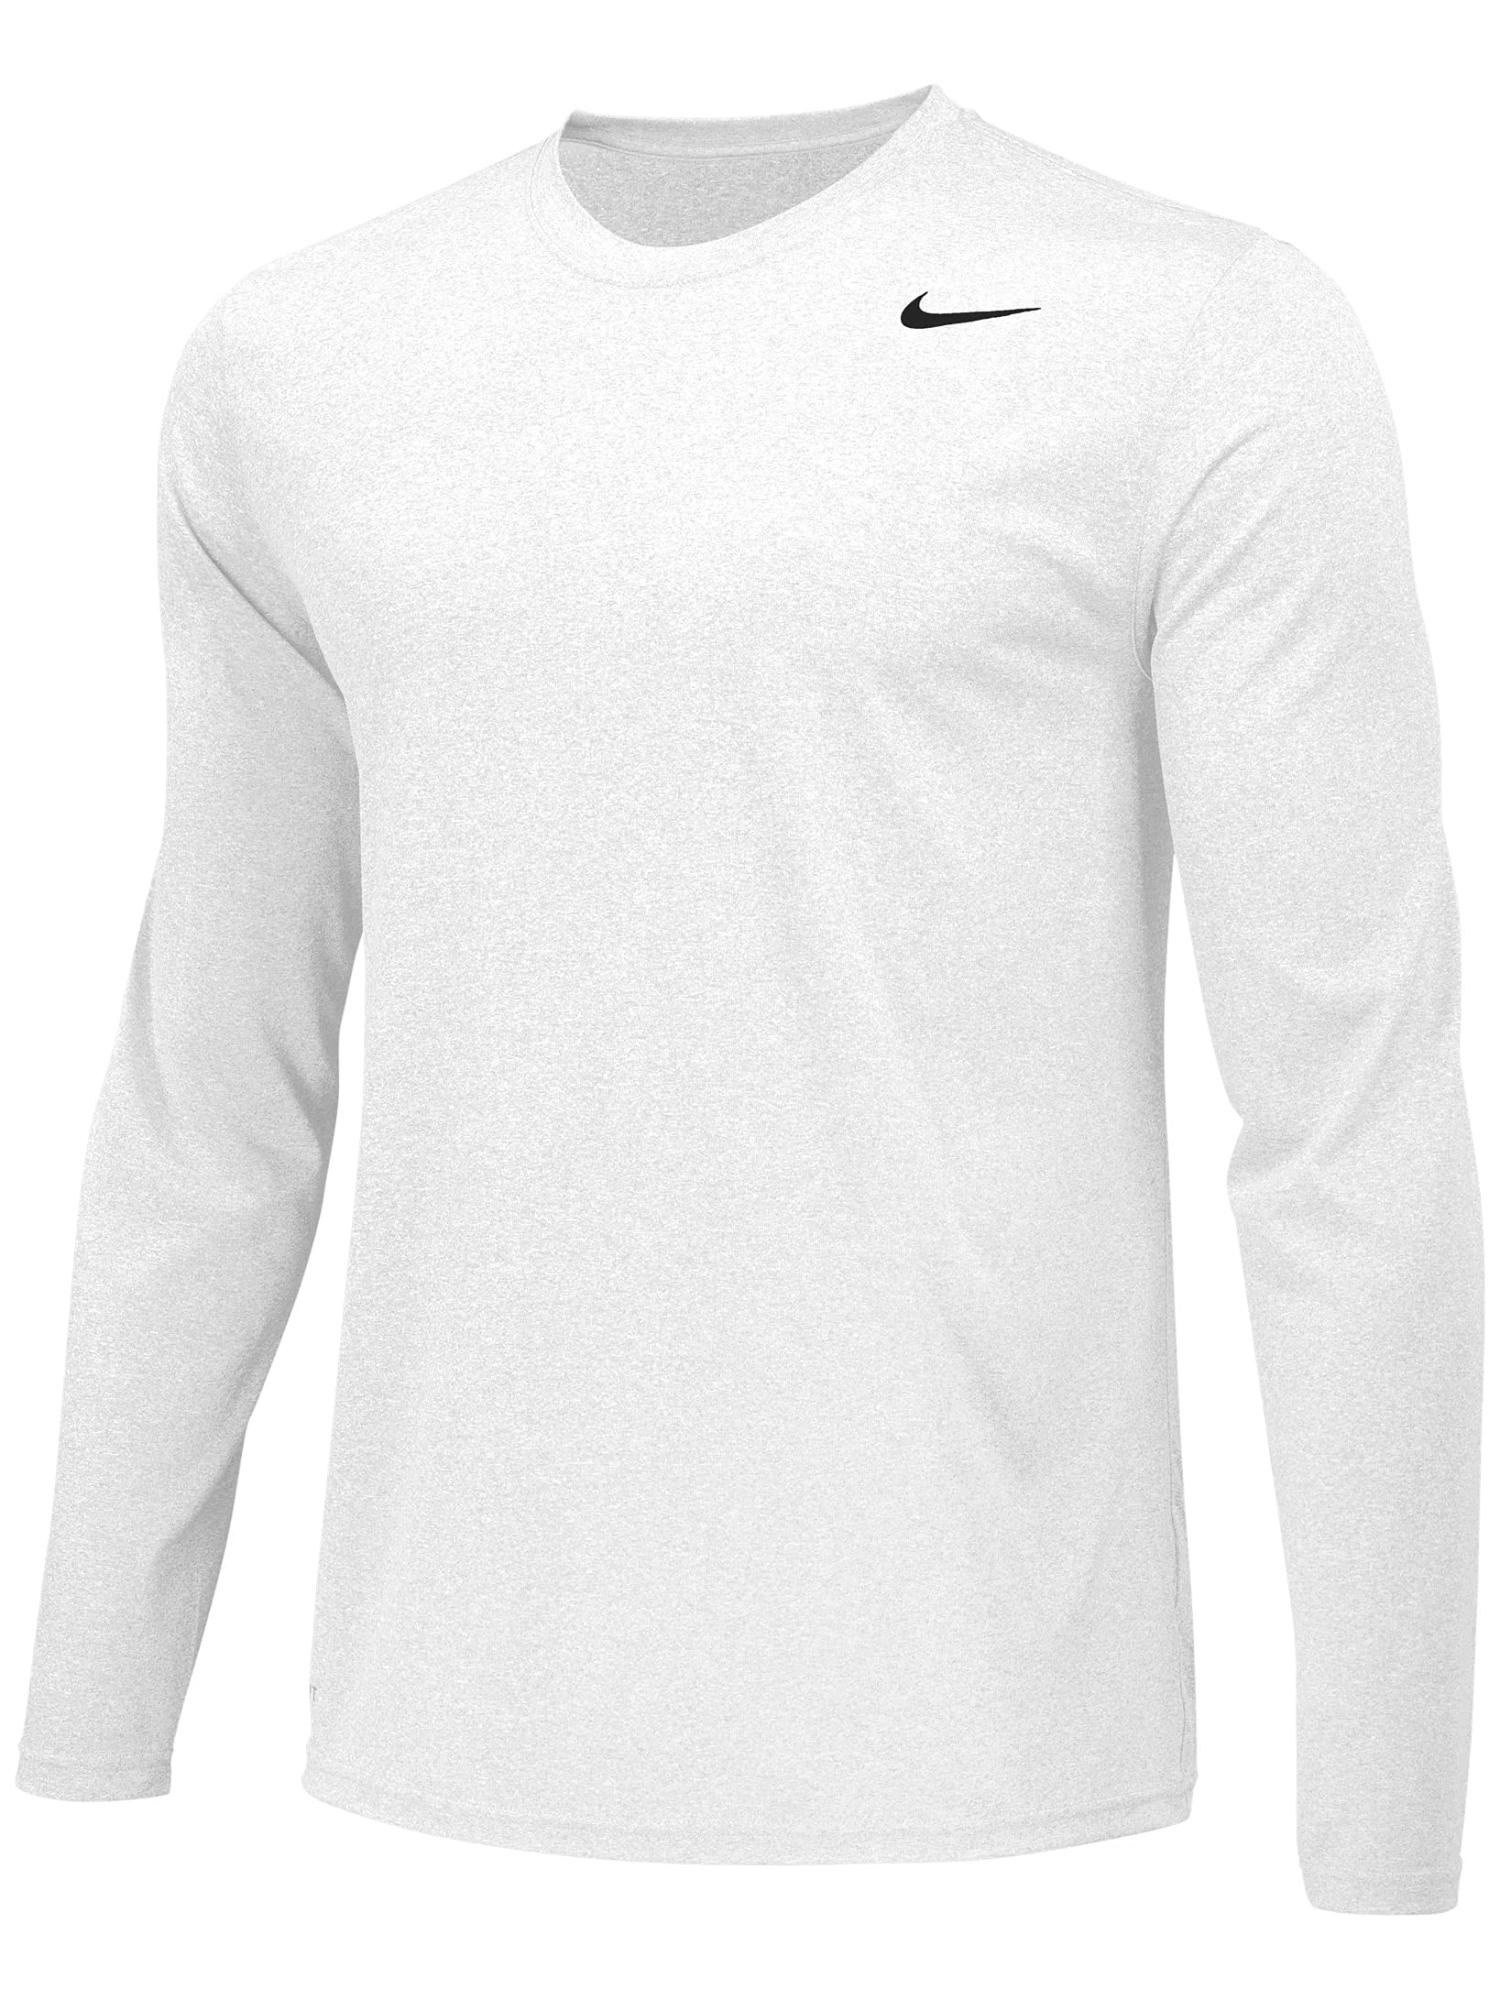 Nike Boys Legend Long Sleeve Athletic T-Shirt White/Cool Grey Large